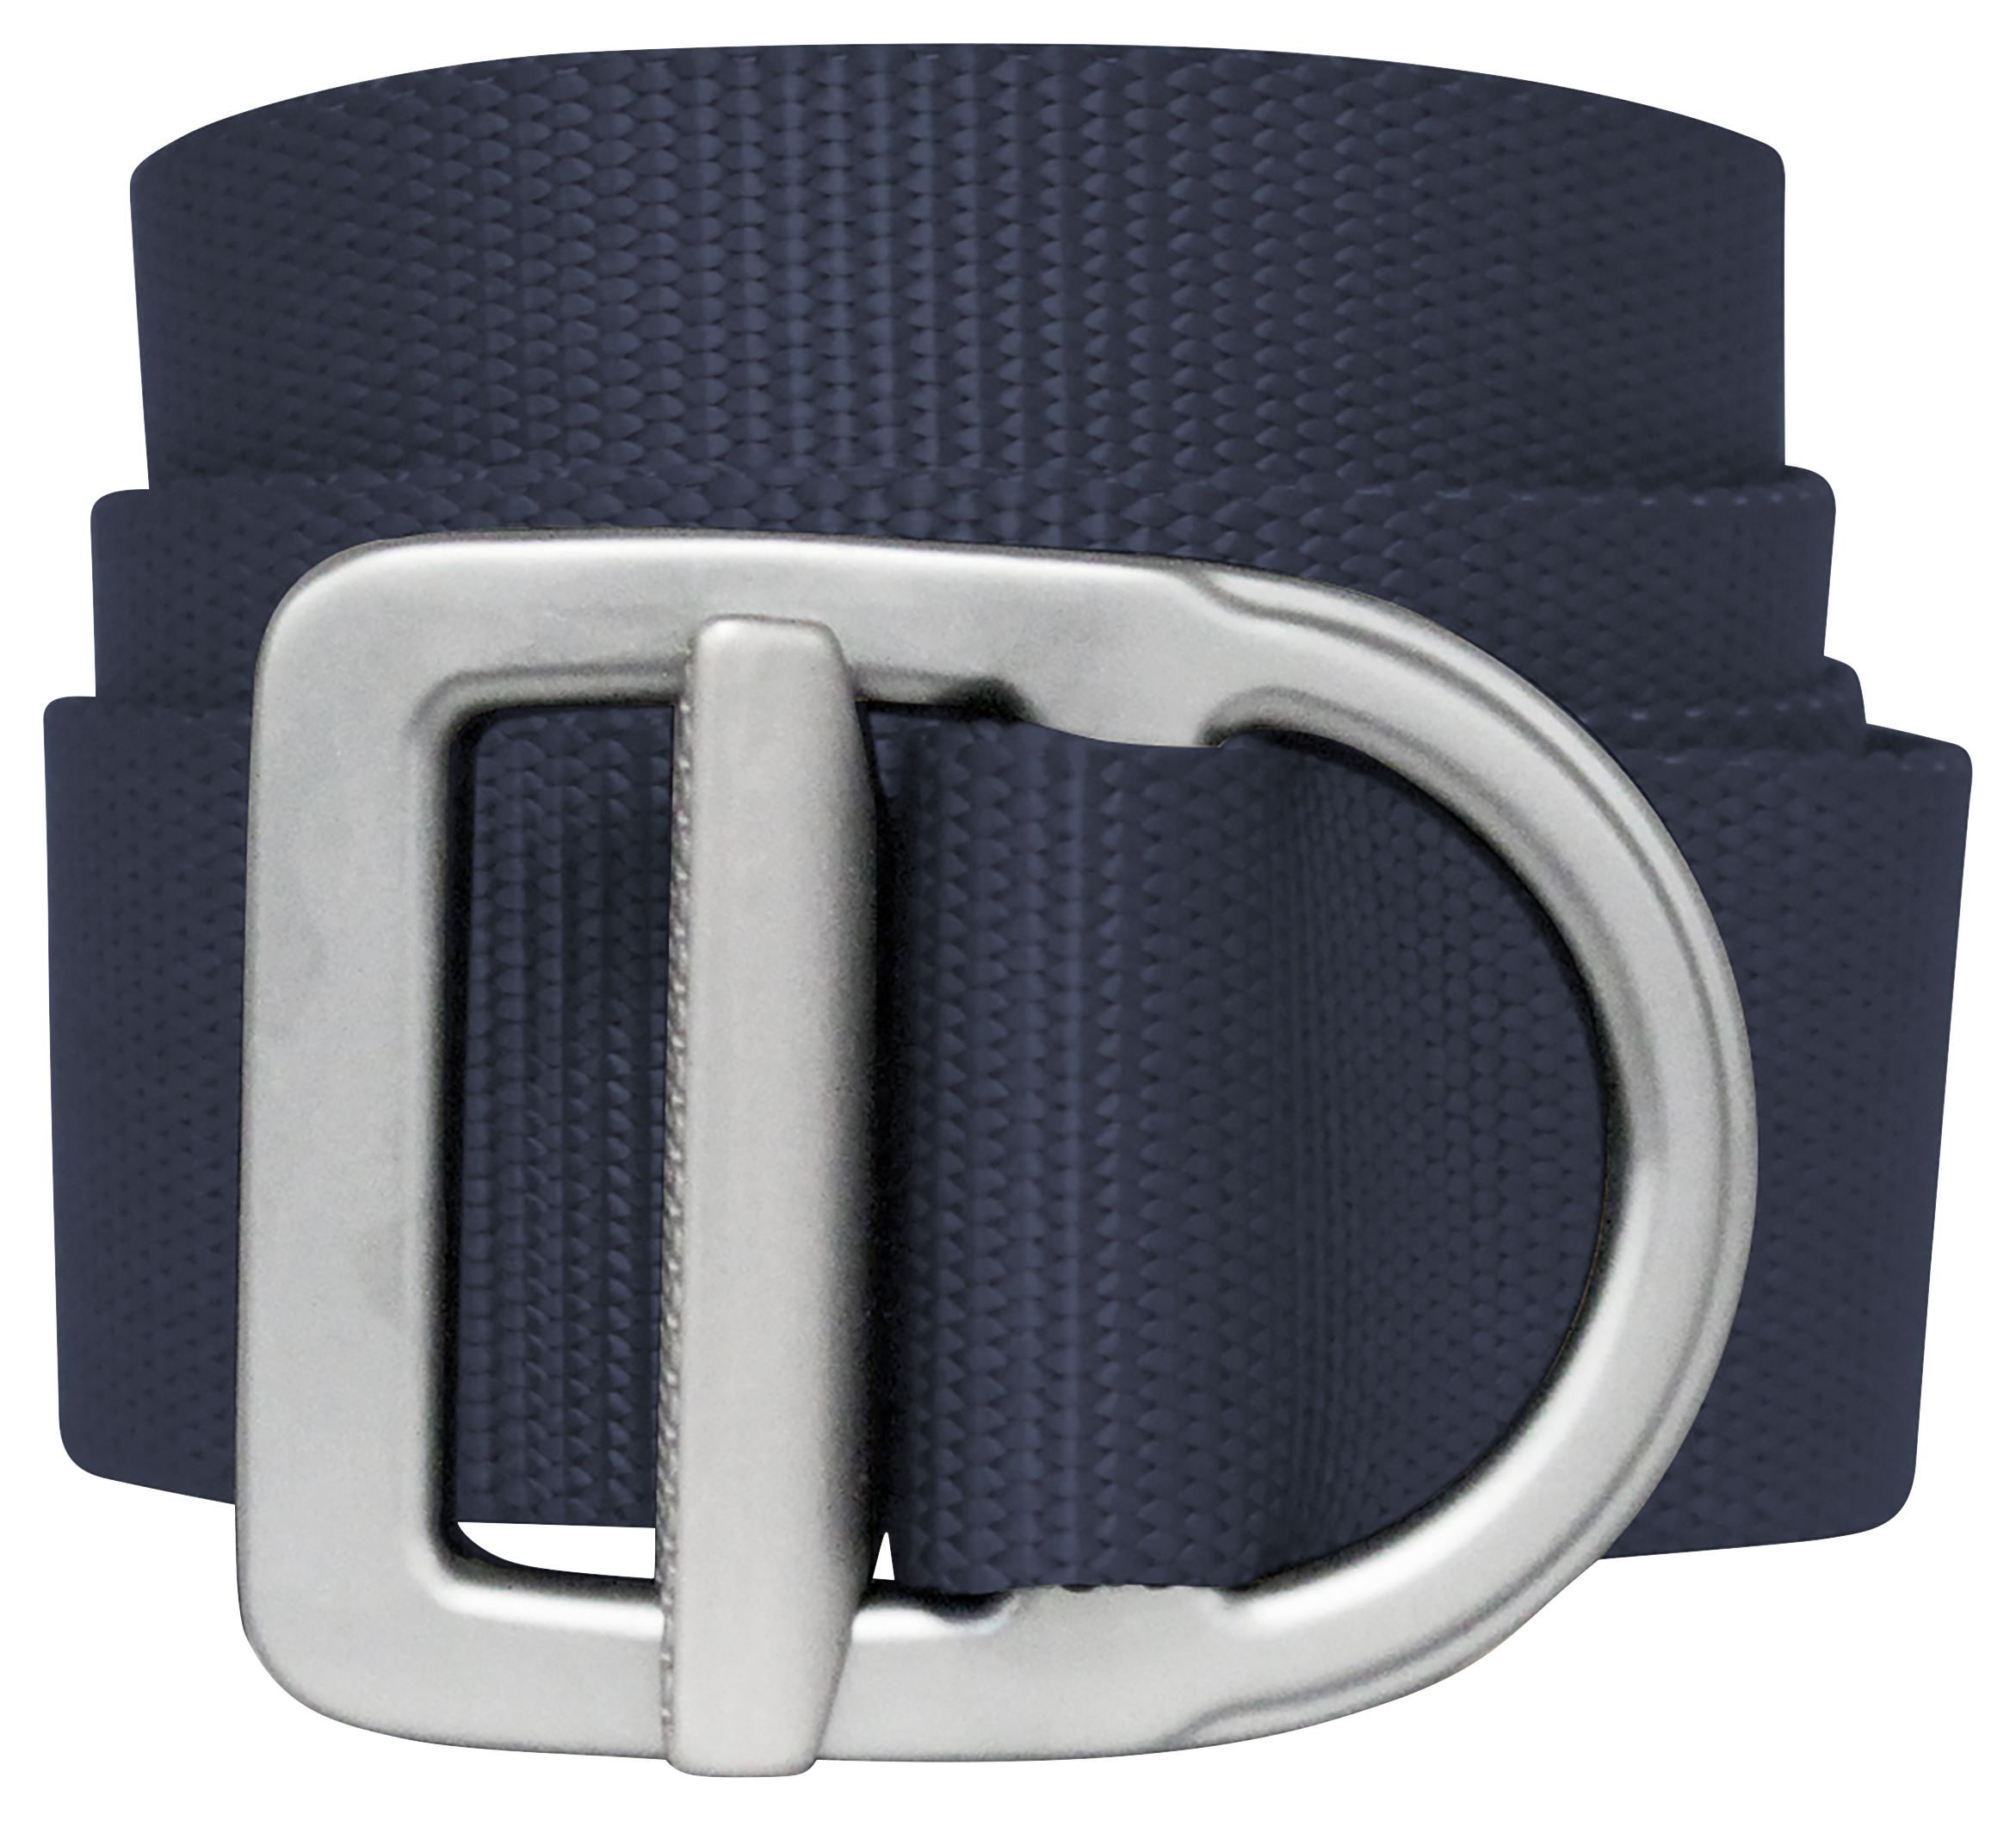 Bison Designs Last Chance Delta Light-Duty Belt for Men - Navy/Silver - 2XL